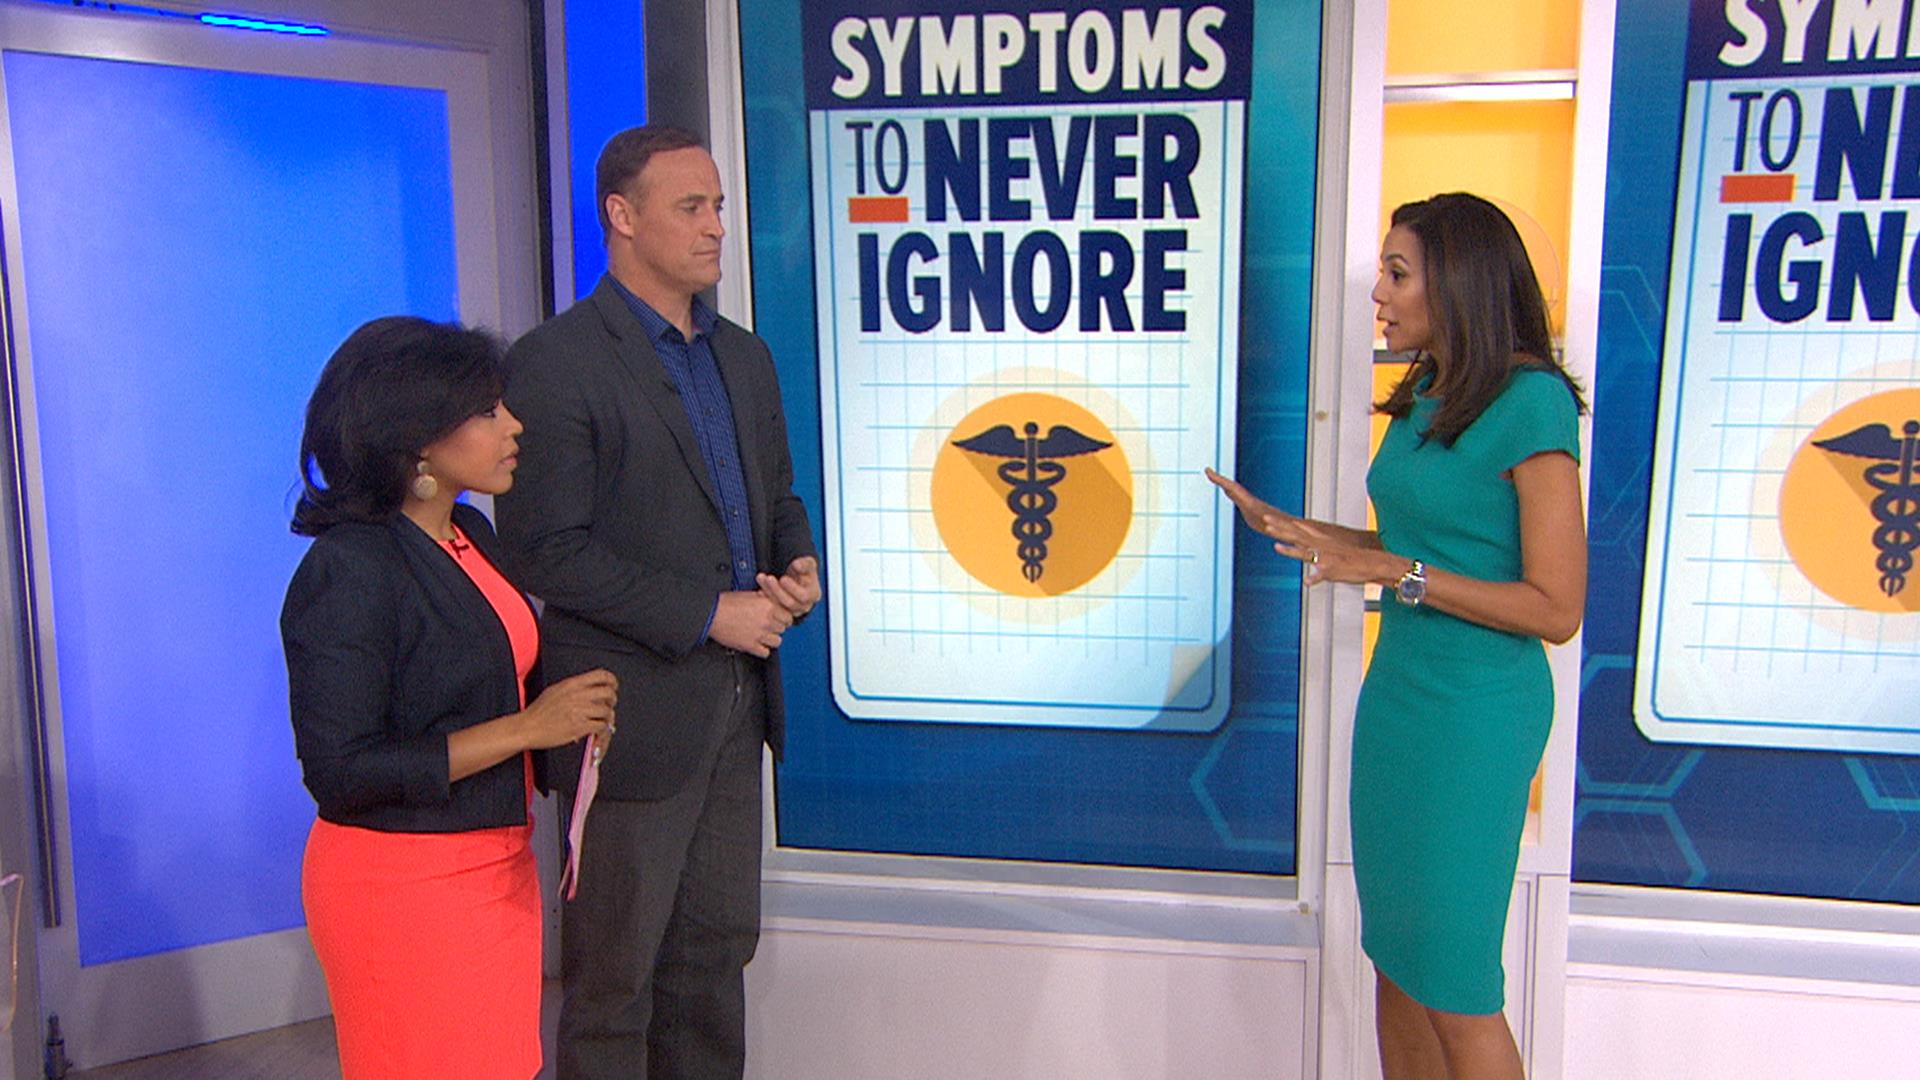 5 health symptoms you should never ignore